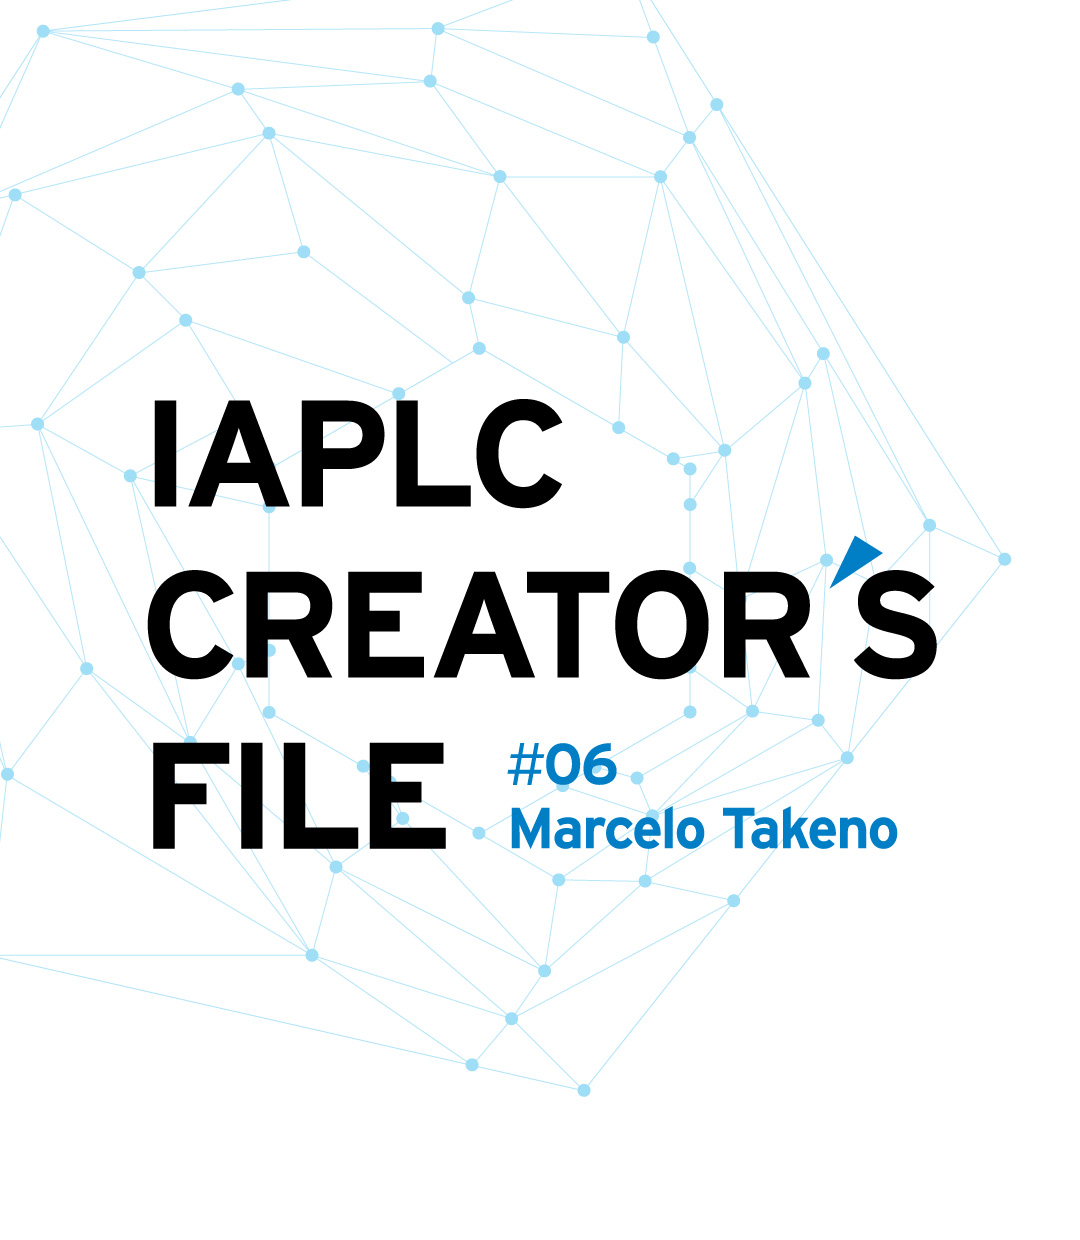 IAPLC CREATOR’S FILE #06 Marcelo Takeno